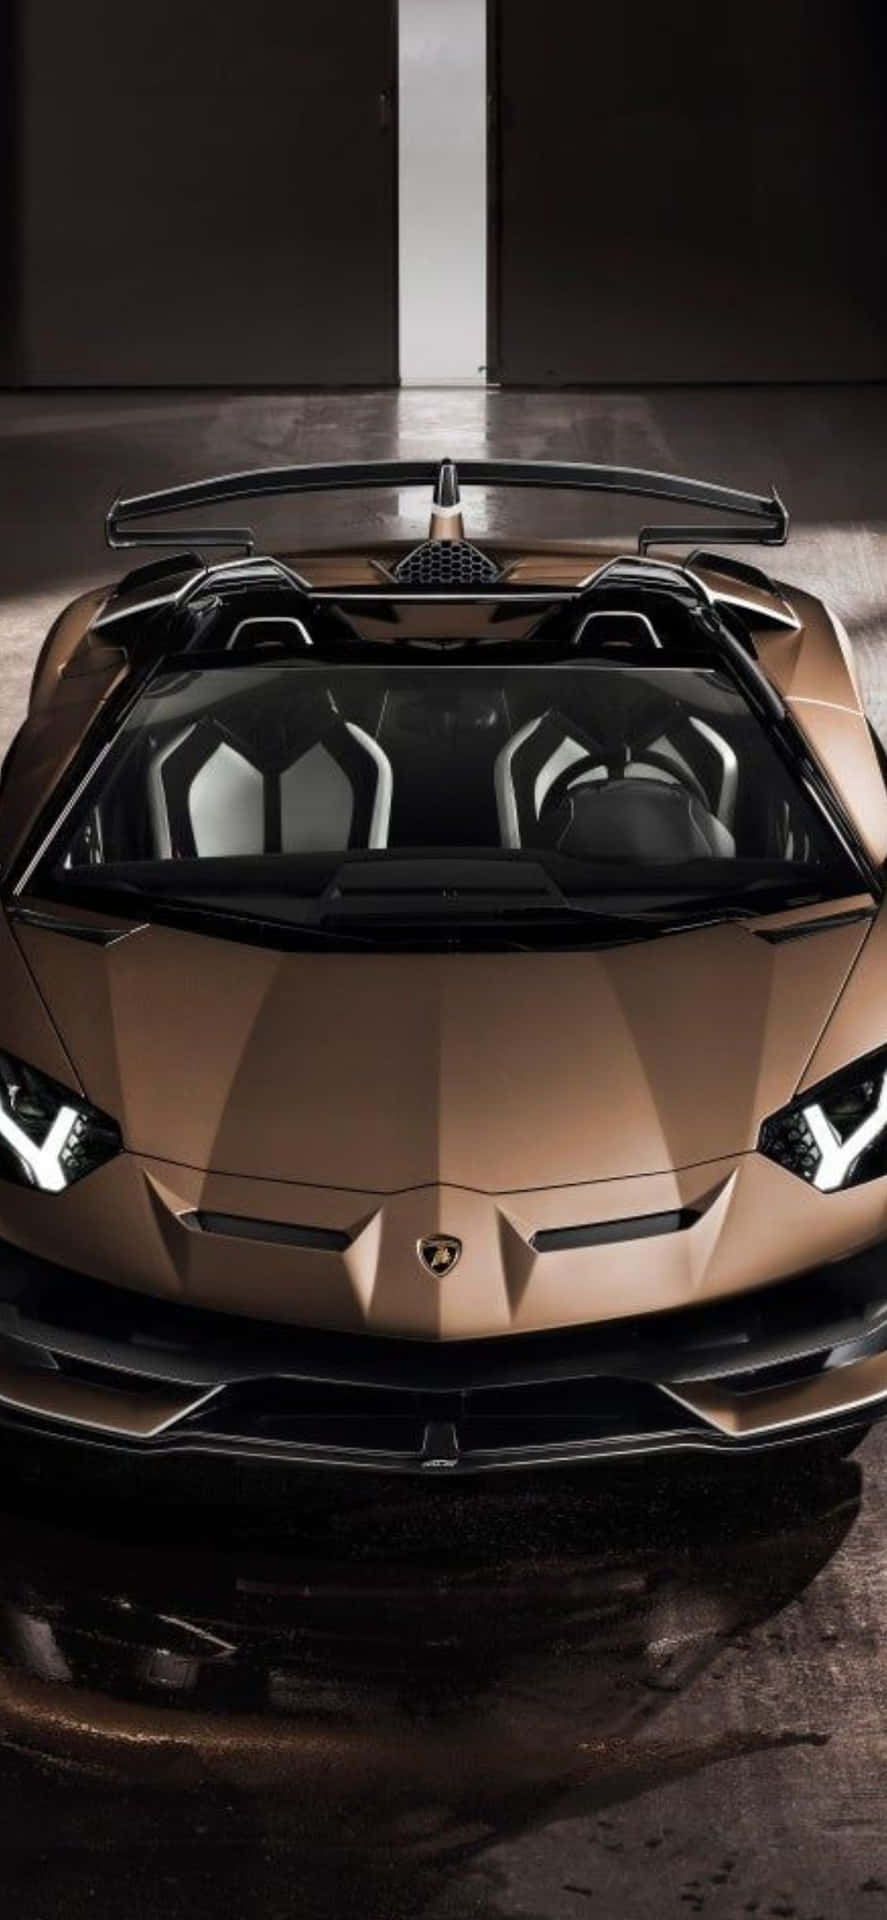 Iphonexs Max Lamborghini Sesto Elemento Bakgrund.